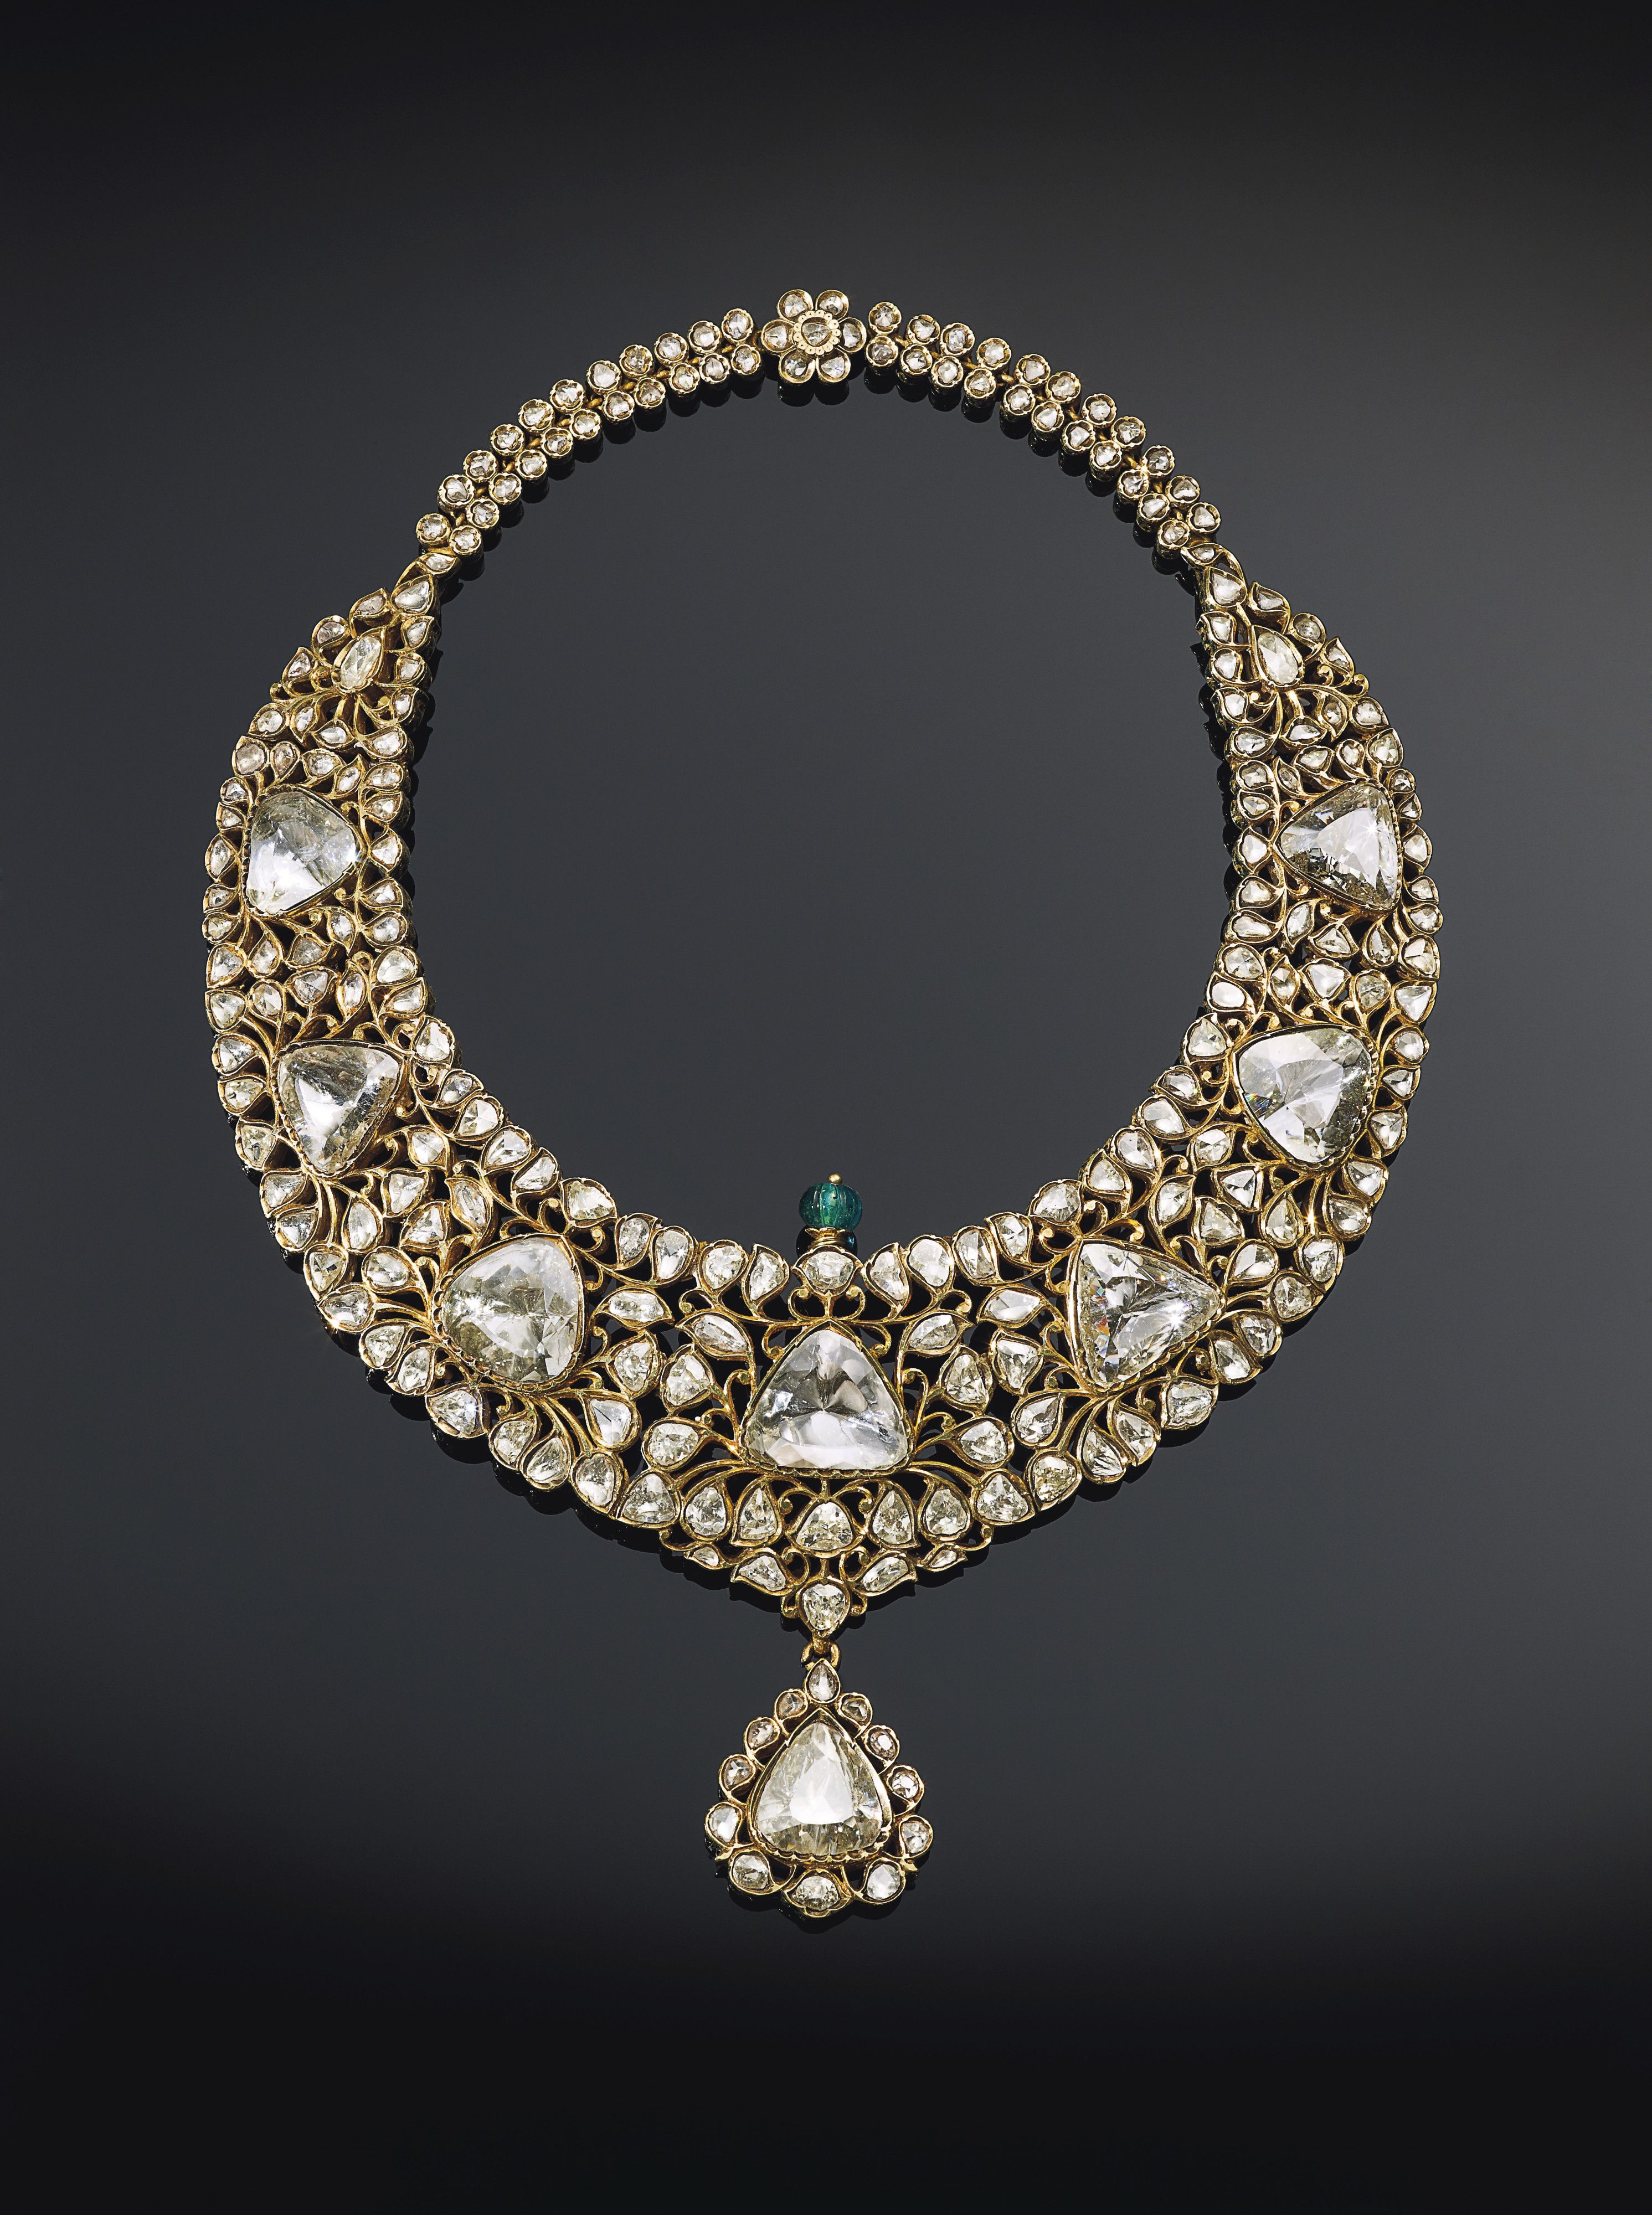 India, jewelry, diamonds, royal